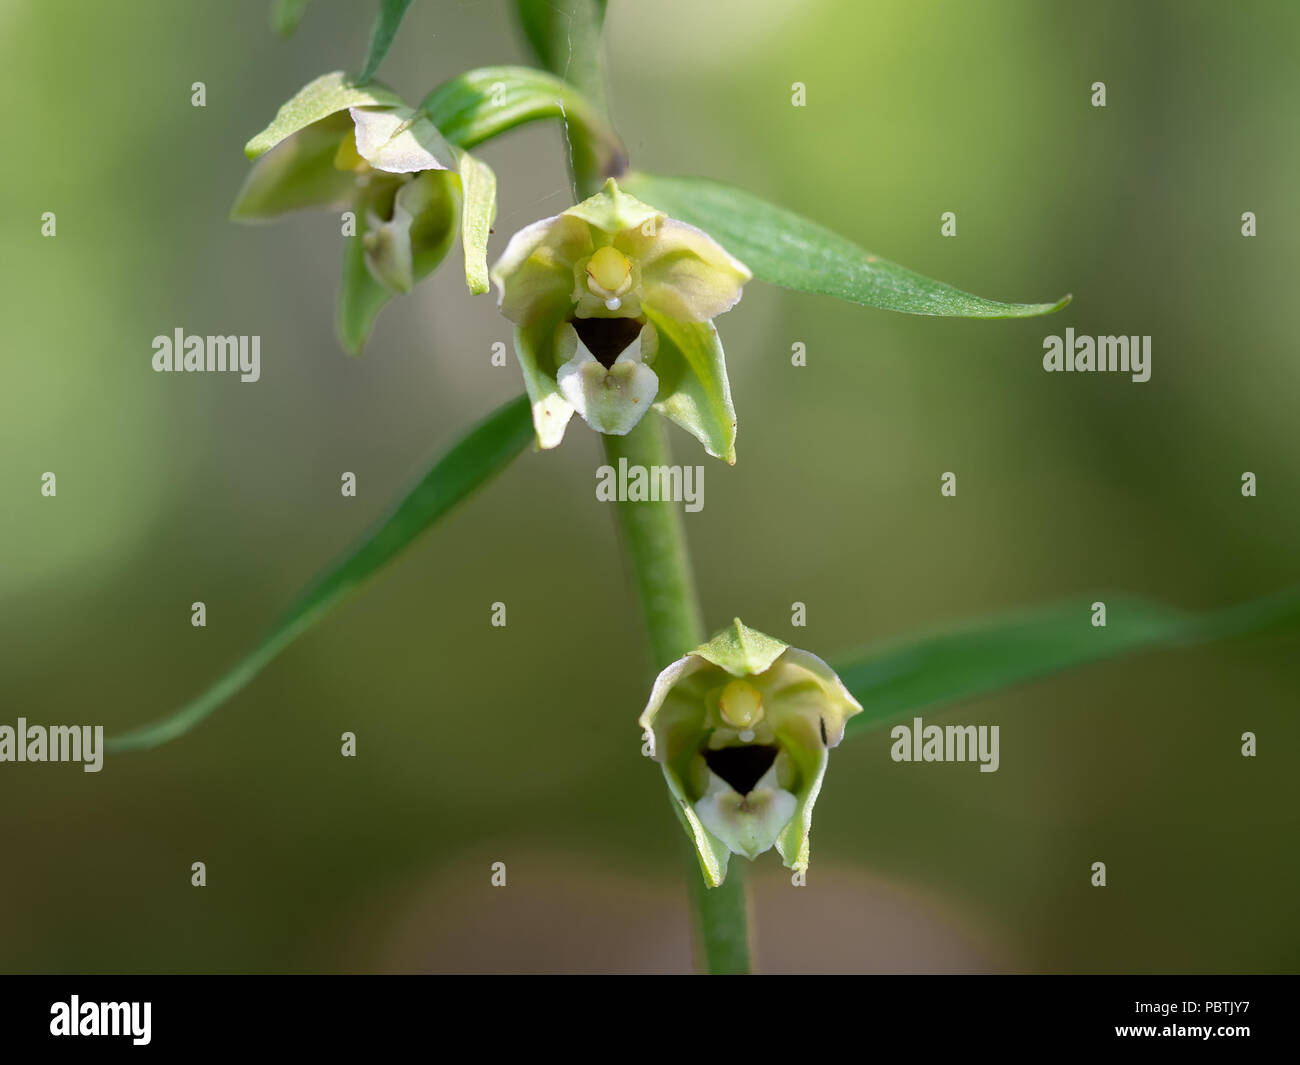 Epipactis helleborine, the broad-leaved helleborine, a terrestrial species of wild orchid. Closeup detail. Stock Photo